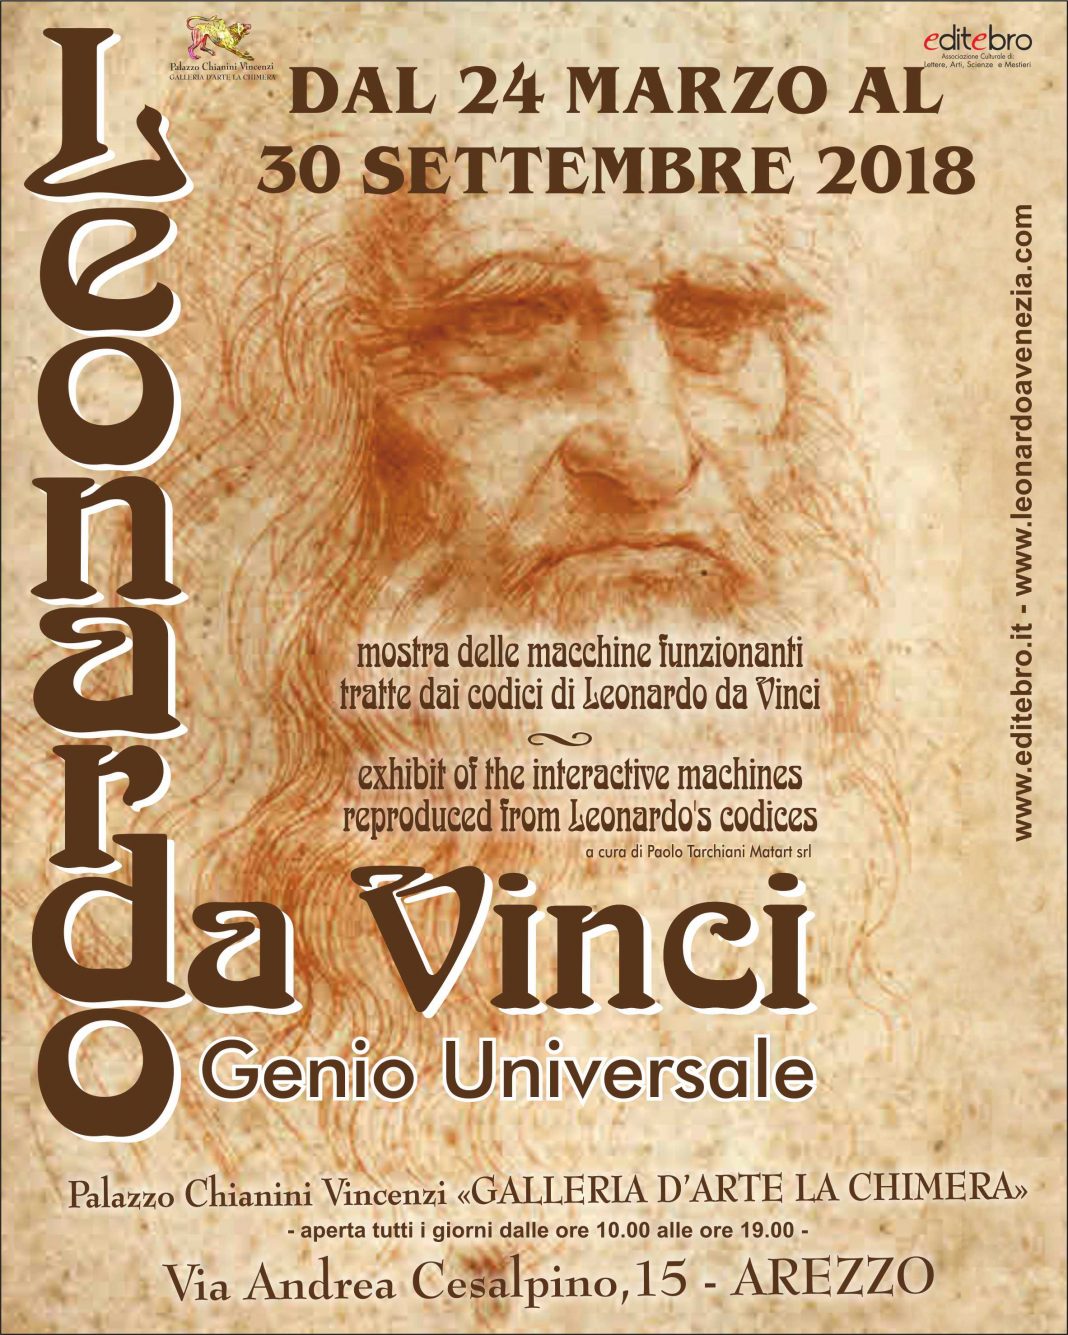 Leonardo Da Vinci Genio Universalehttps://www.exibart.com/repository/media/eventi/2018/05/leonardo-da-vinci-genio-universale-1068x1335.jpg